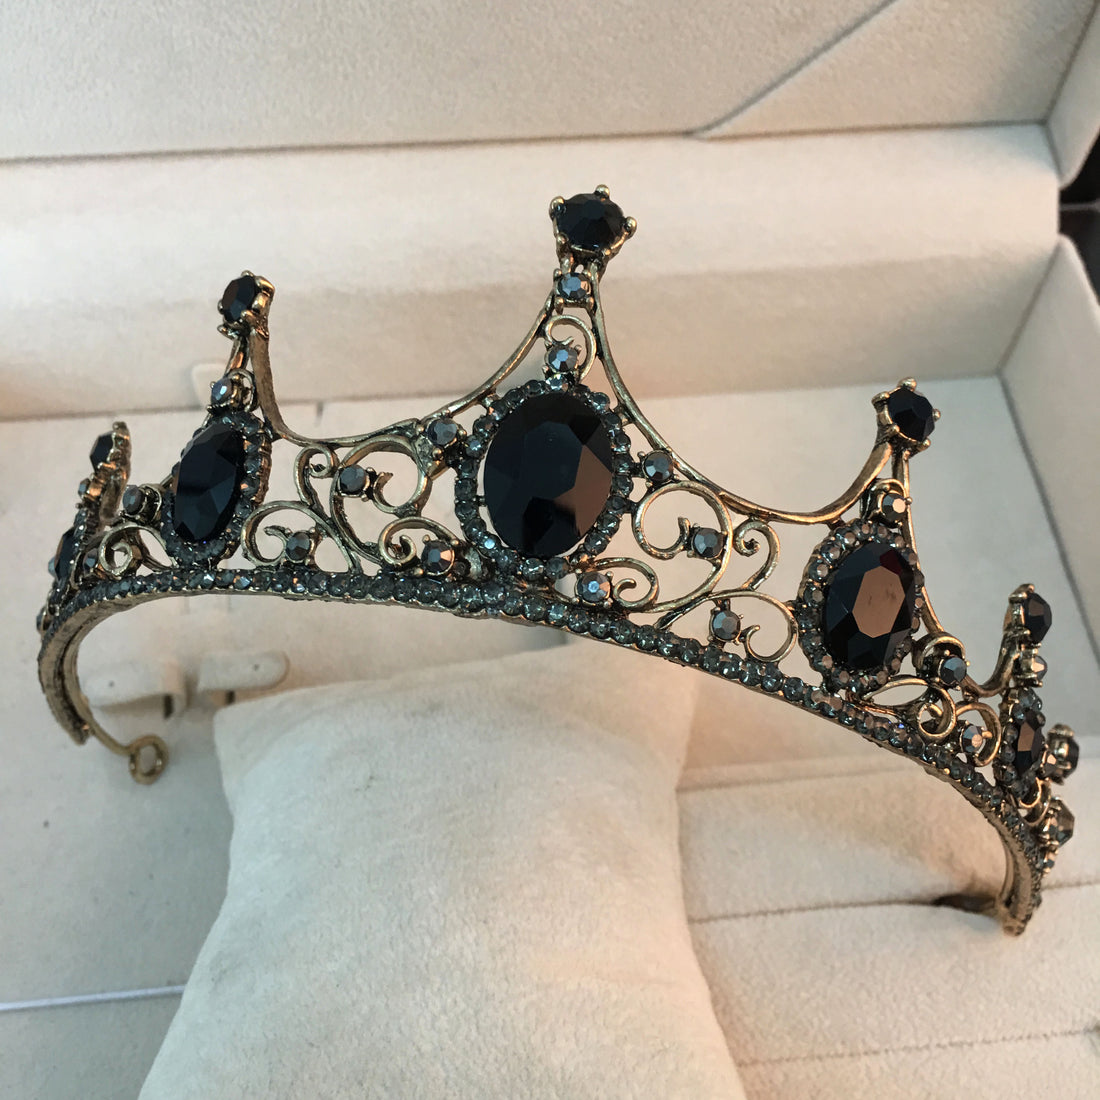 Black Baroque Vintage Crown KF83711